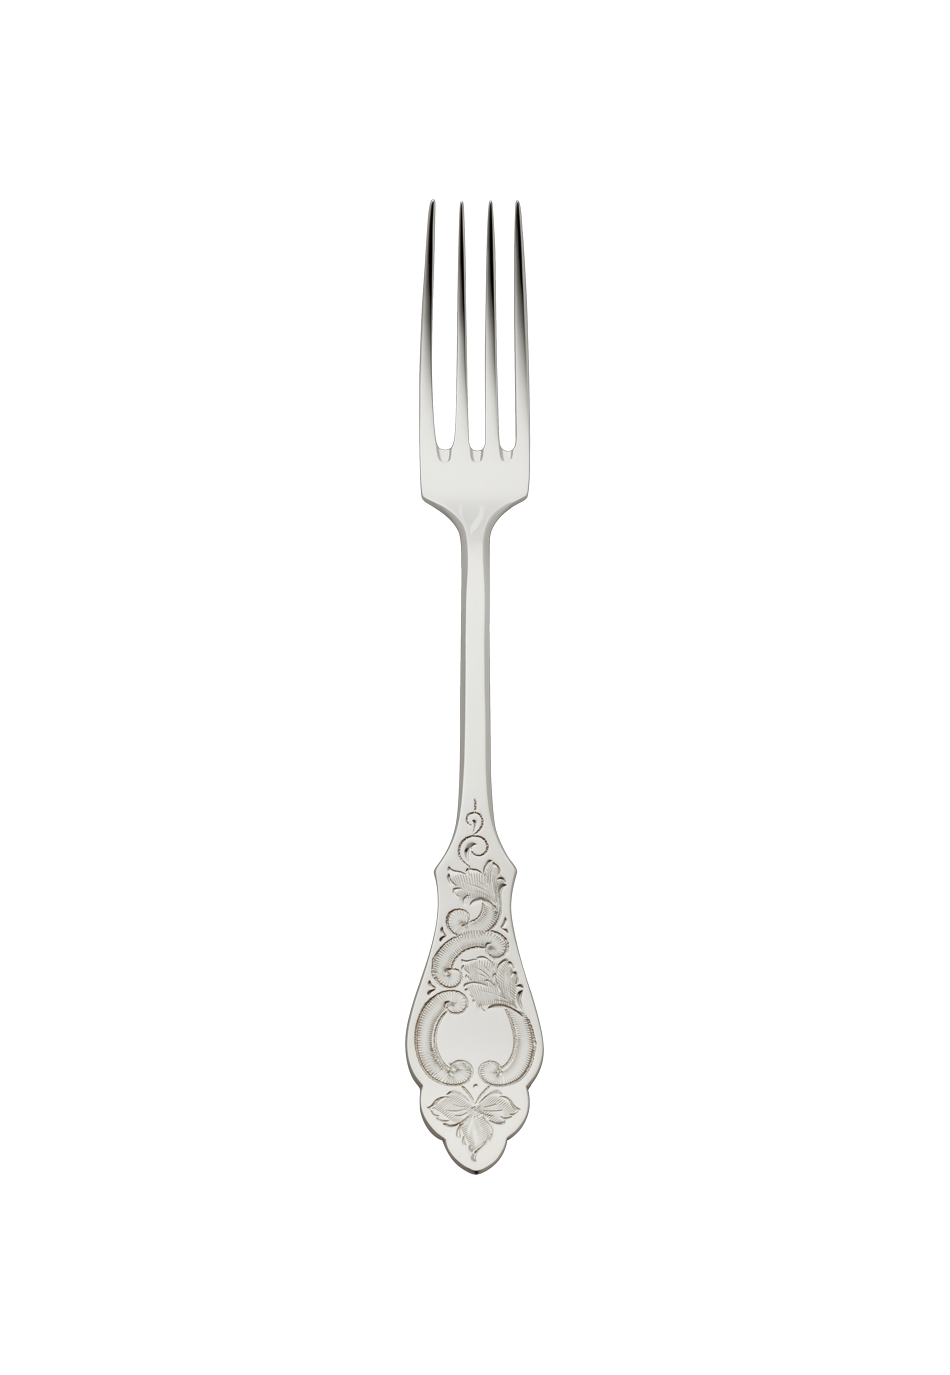 Ostfriesen Table Fork (150g massive silverplated)